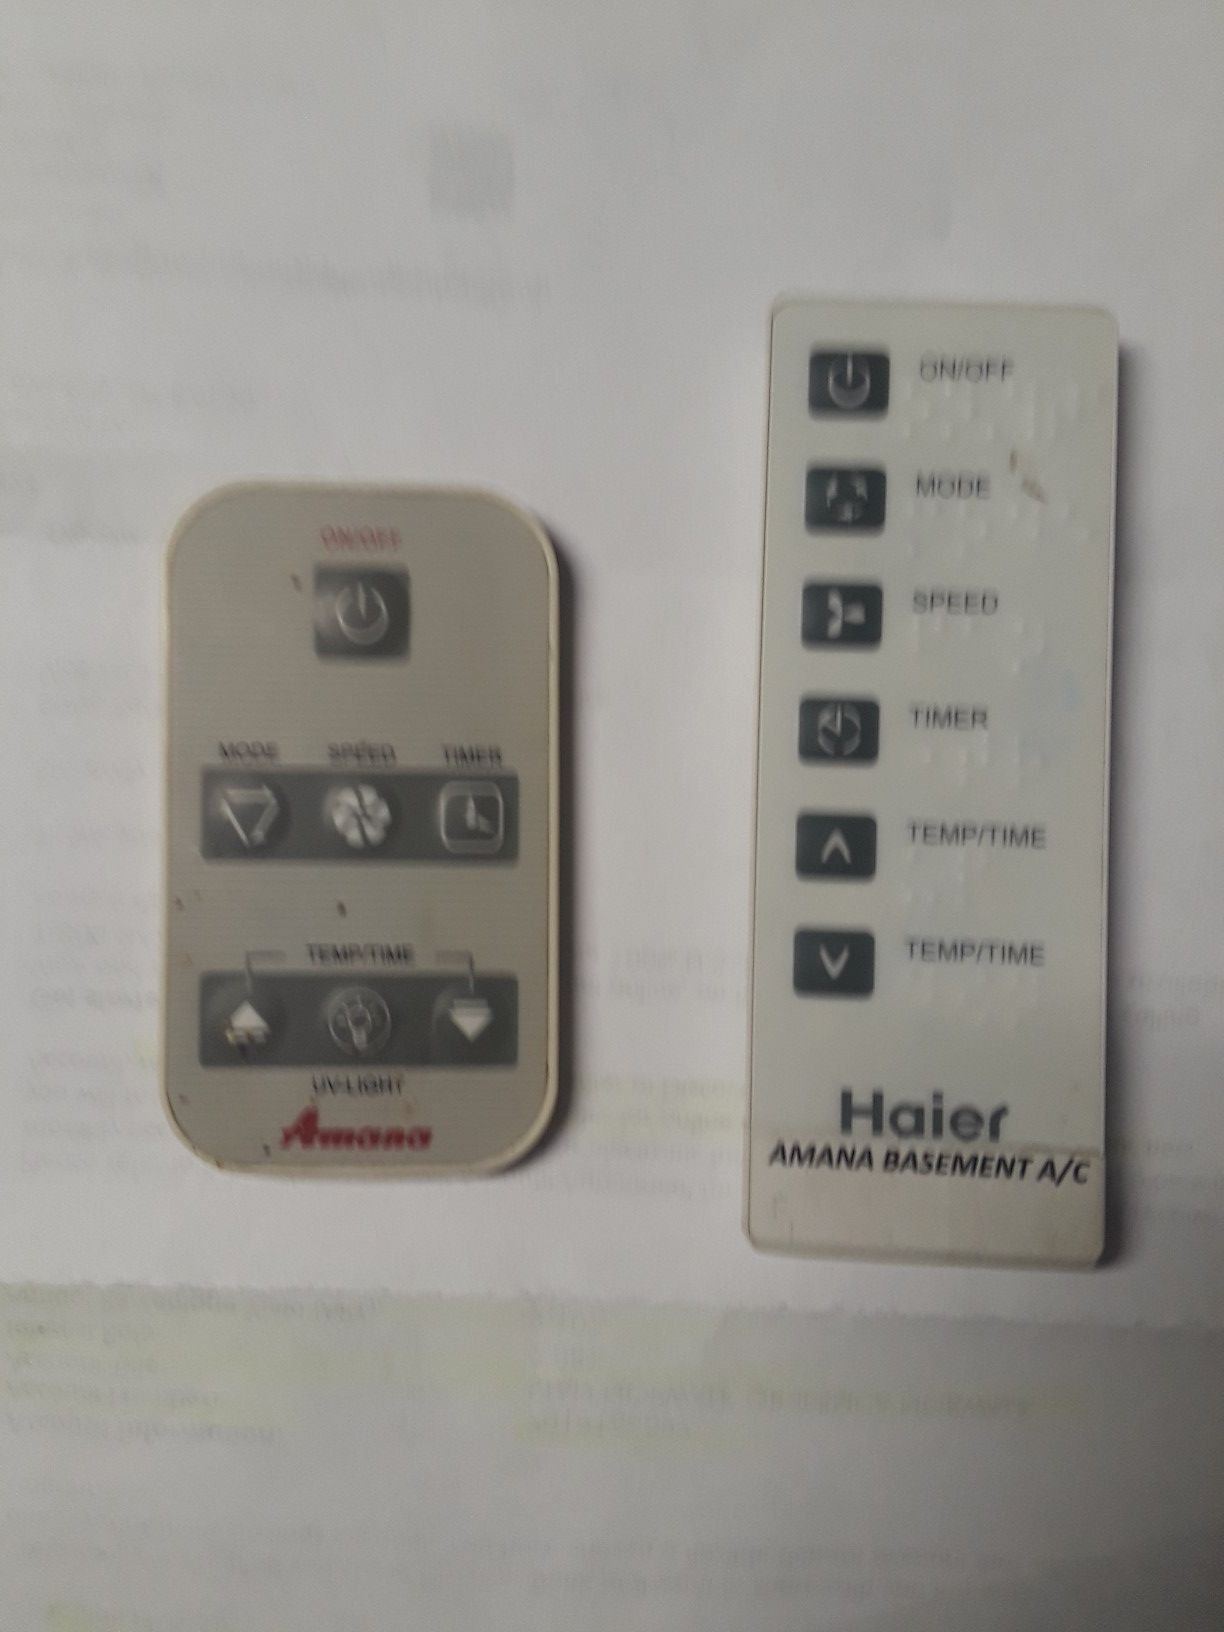 Air conditioner remote controls for Amana air conditioner